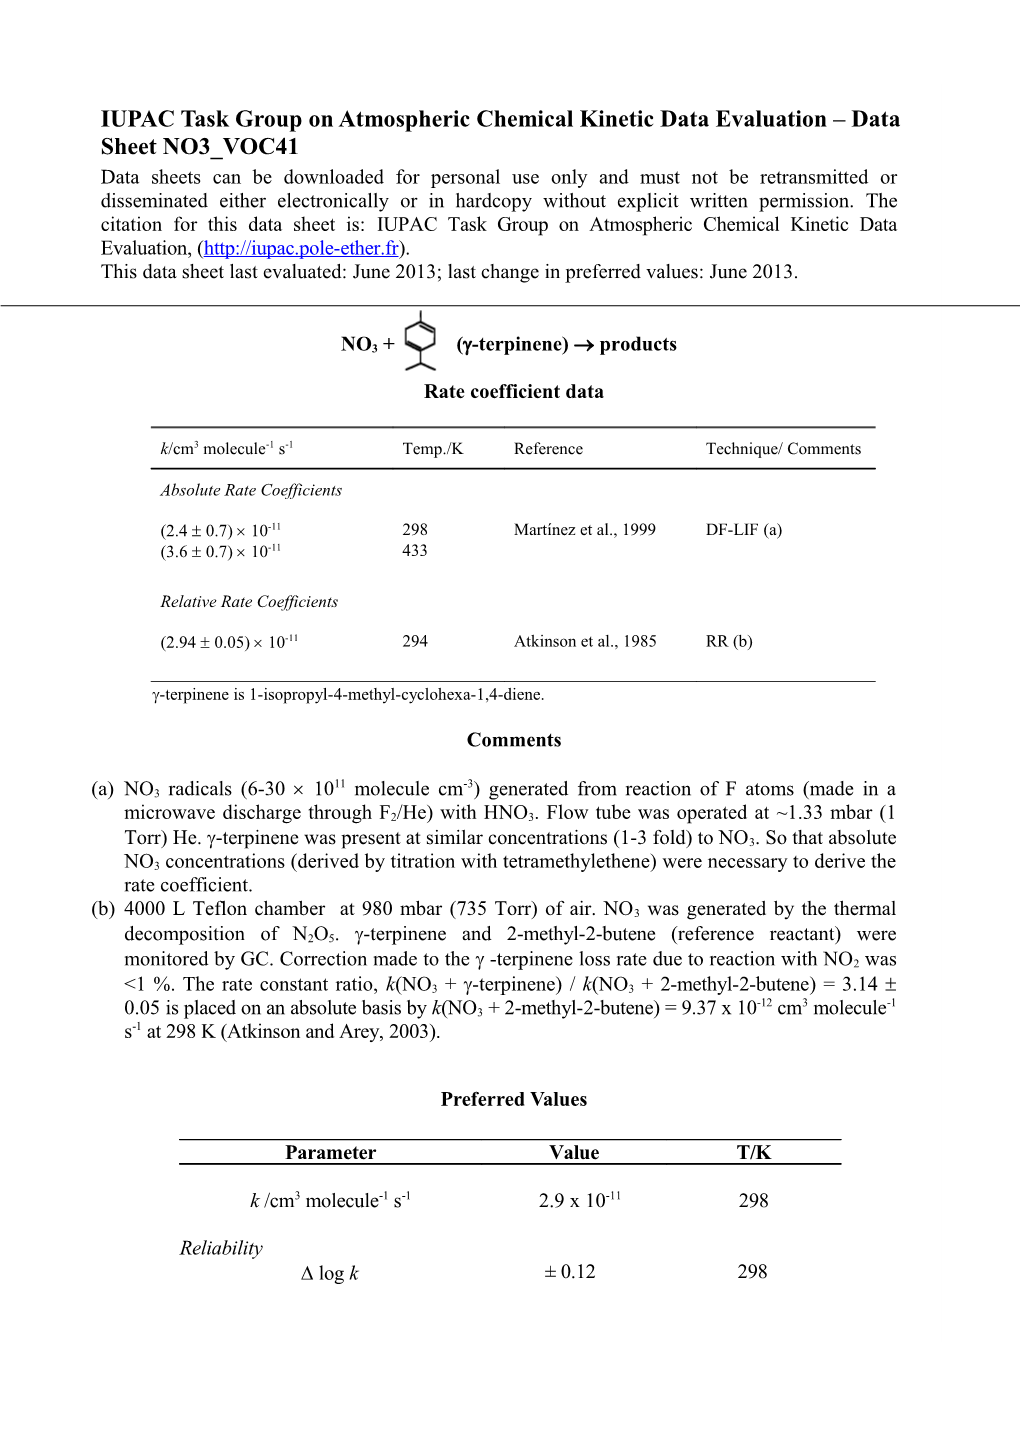 IUPAC Task Group on Atmospheric Chemical Kinetic Data Evaluation Data Sheet NO3 VOC41